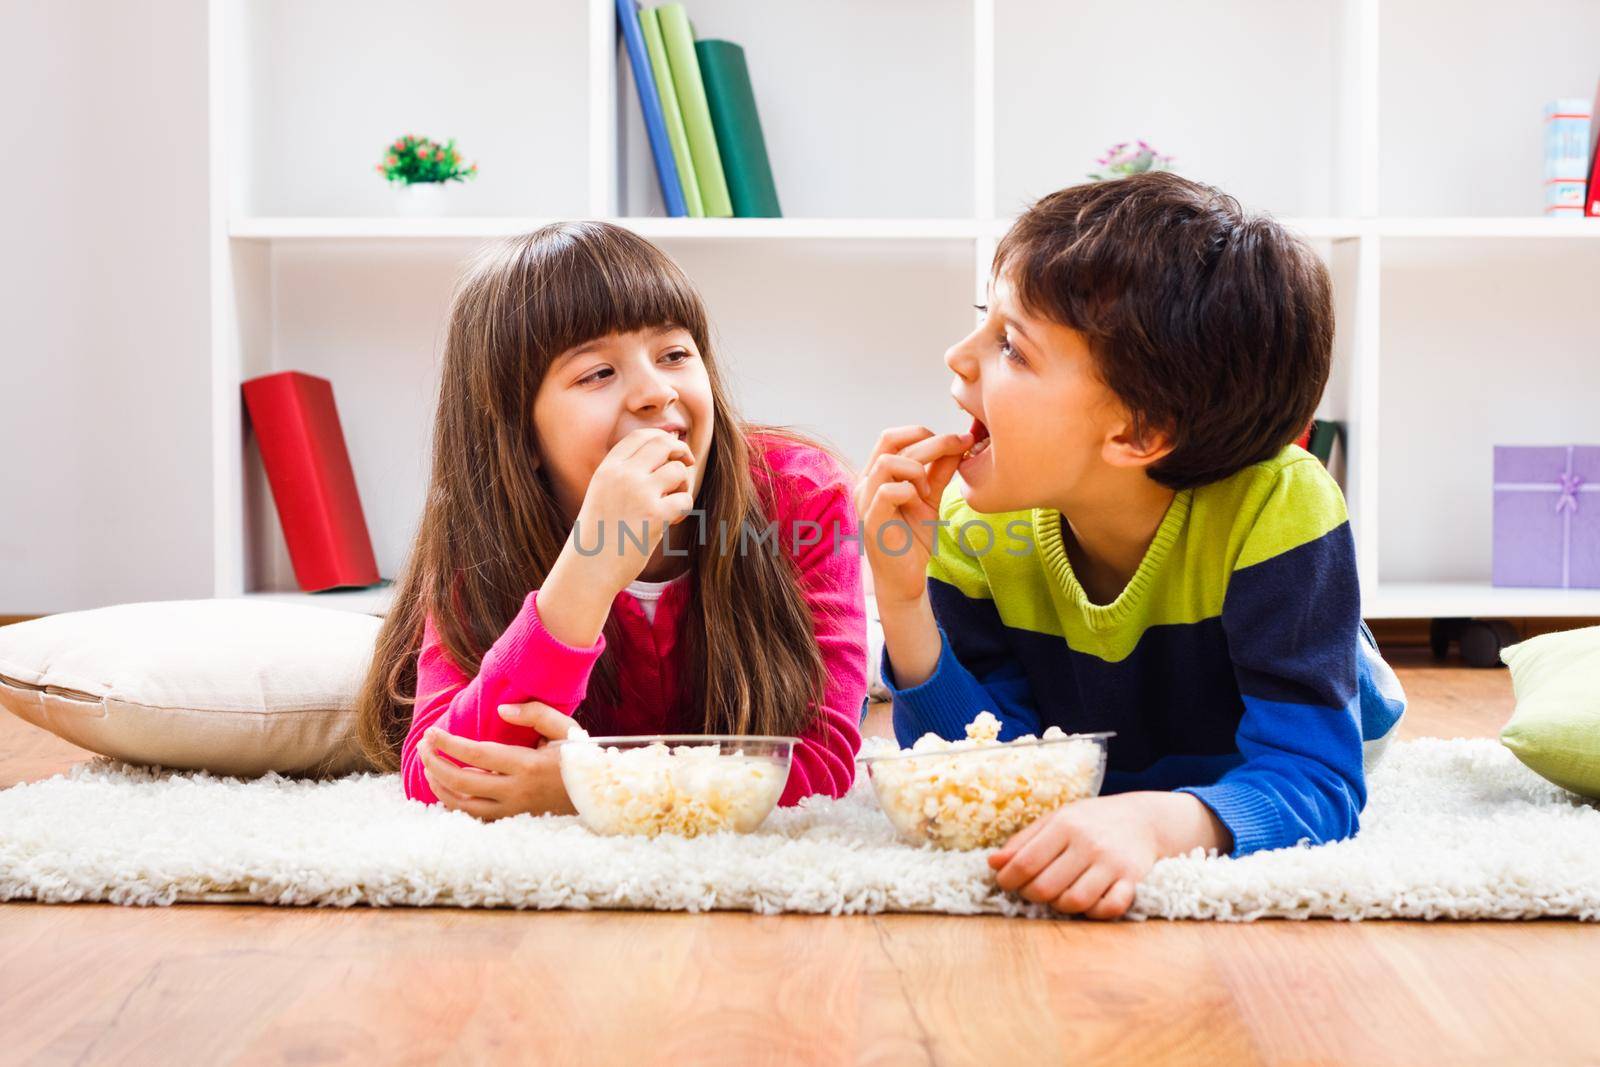 Image of children eating popcorn